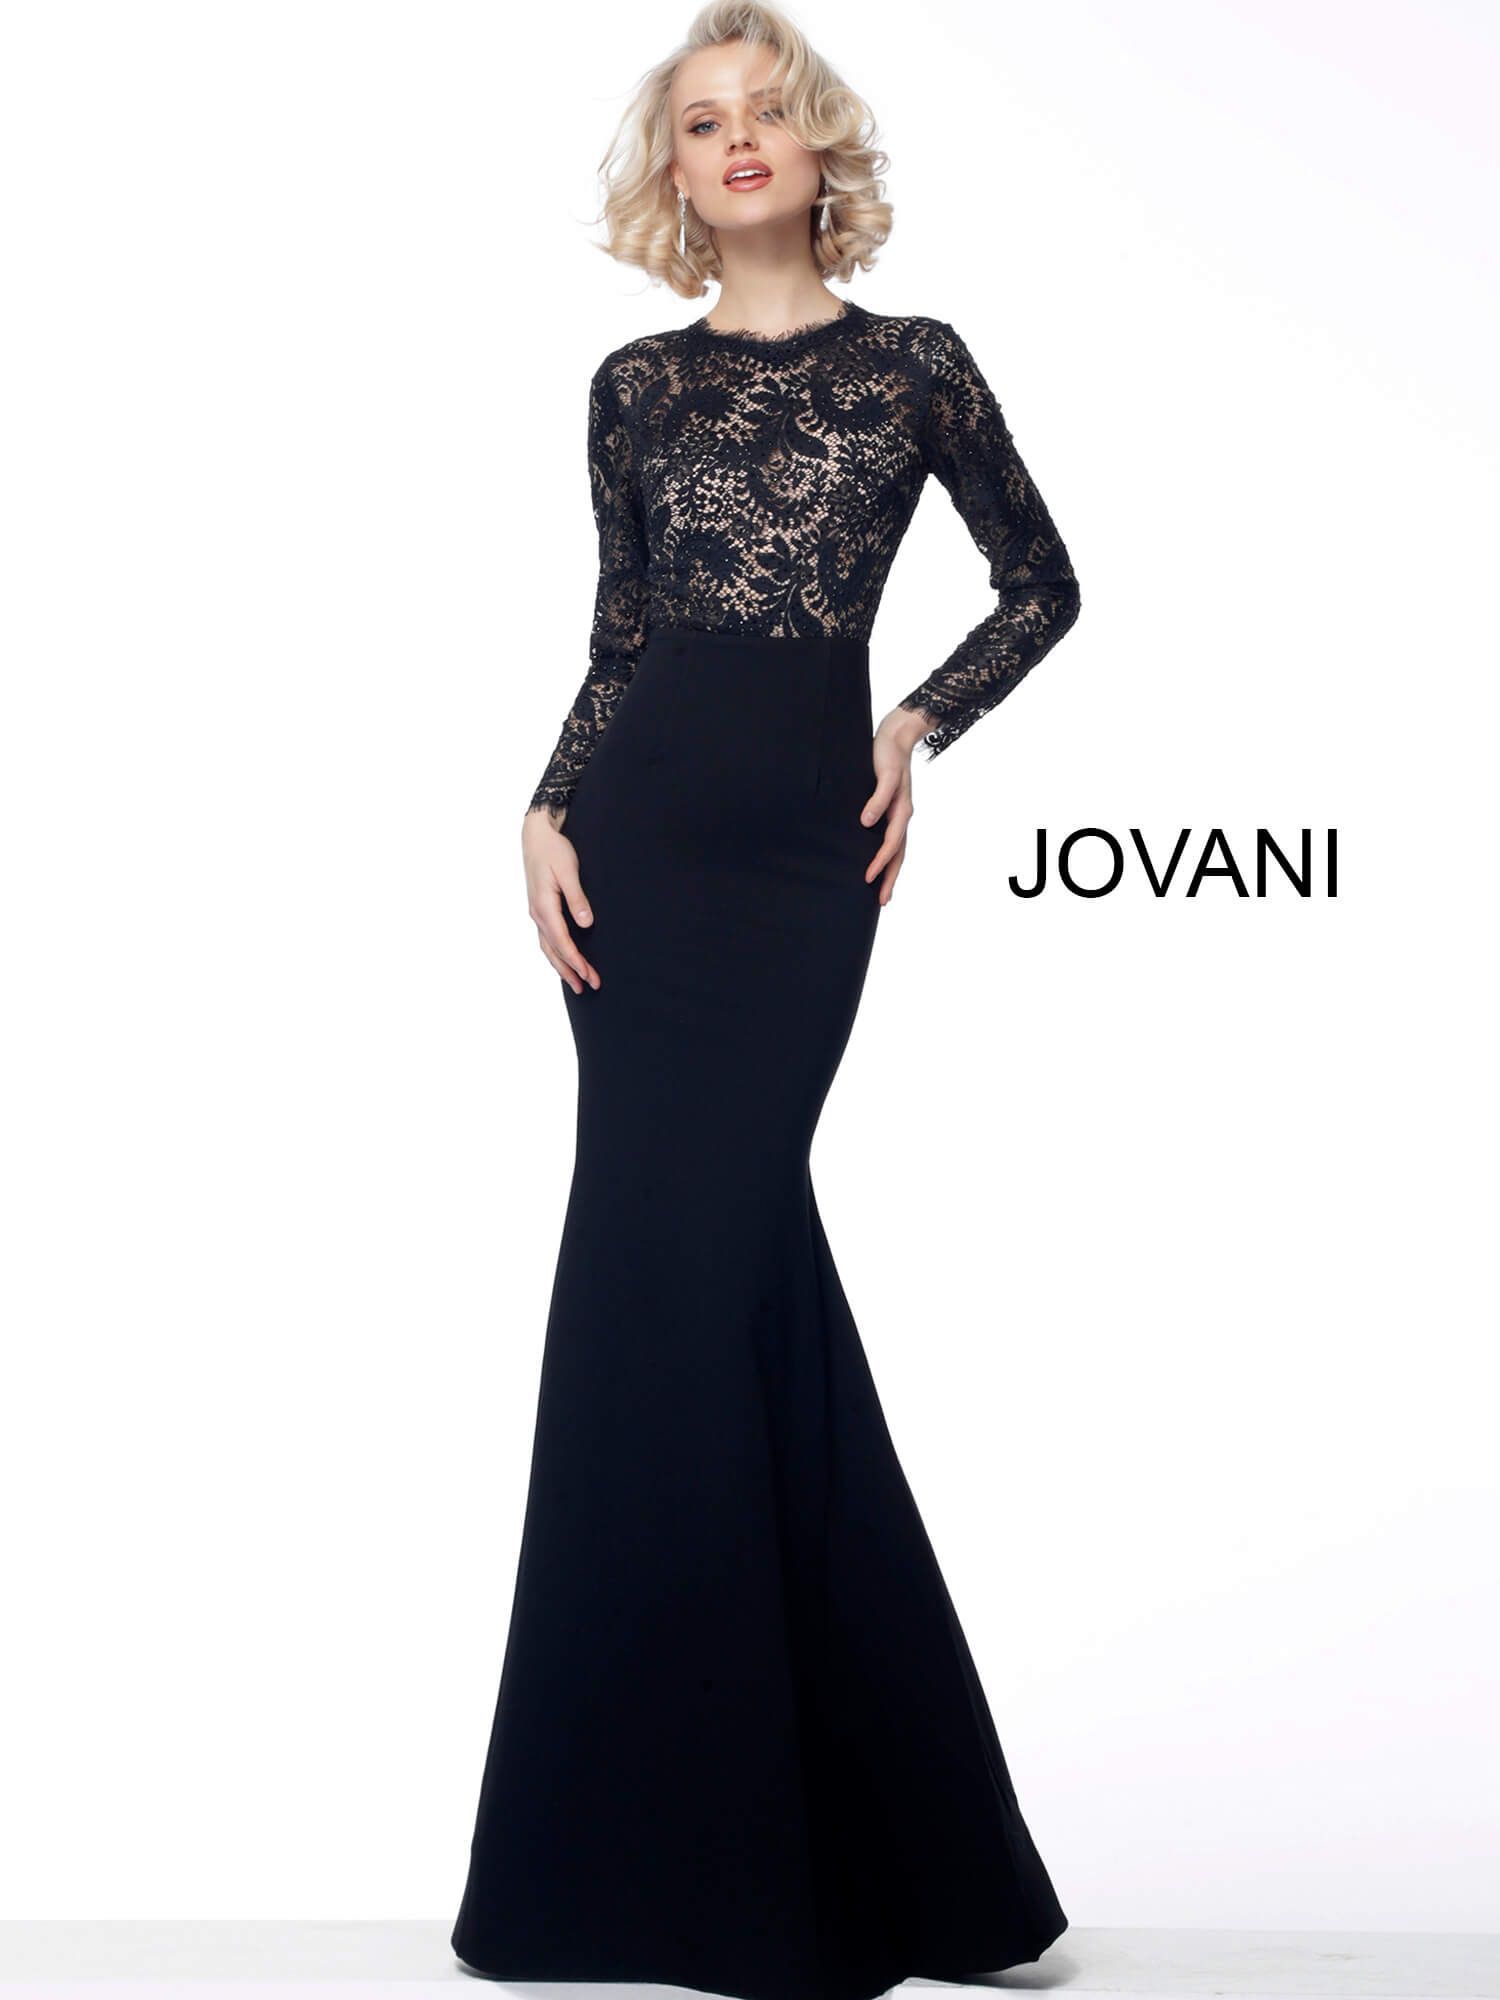 Jovani 67755 Black Fitted Lace Bodice Evening Dress -   17 dress Black evening ideas